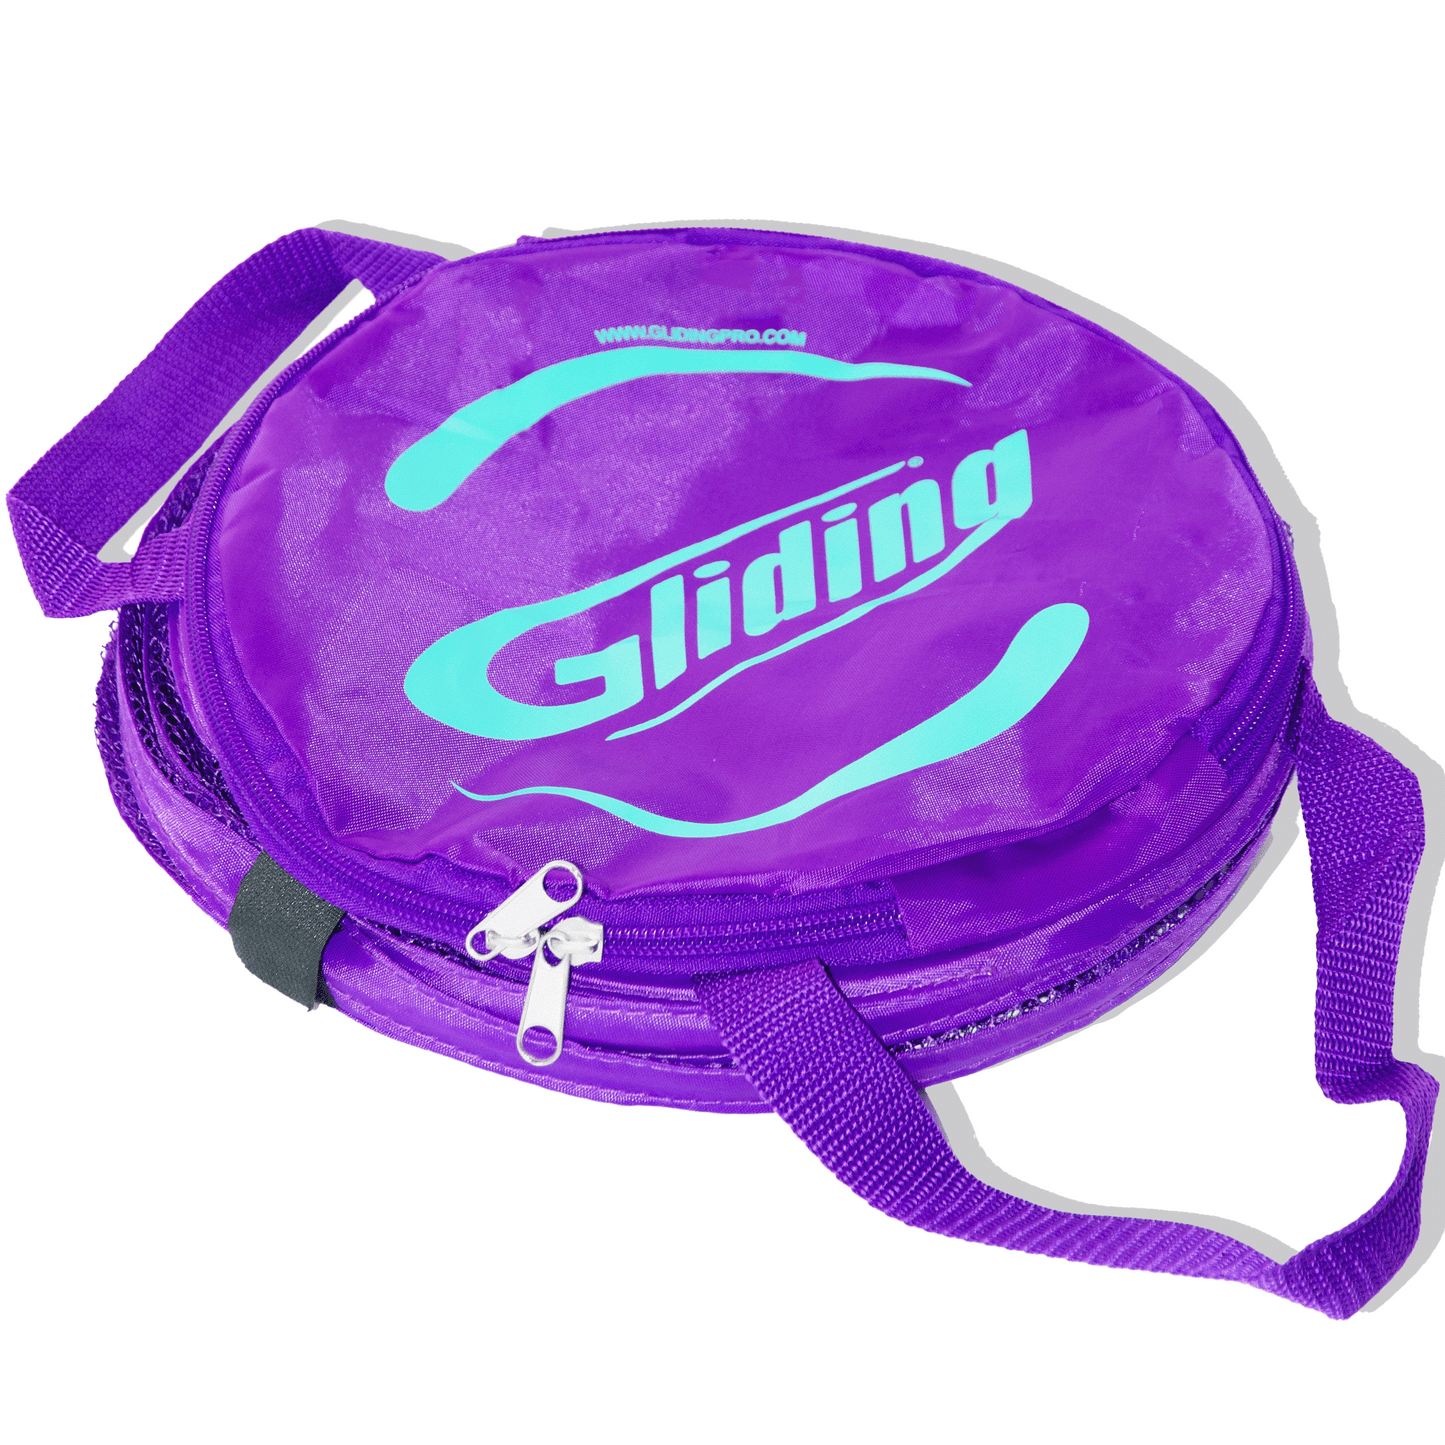 Gliding Discs Collapsible Mesh Storage Bag - Purple